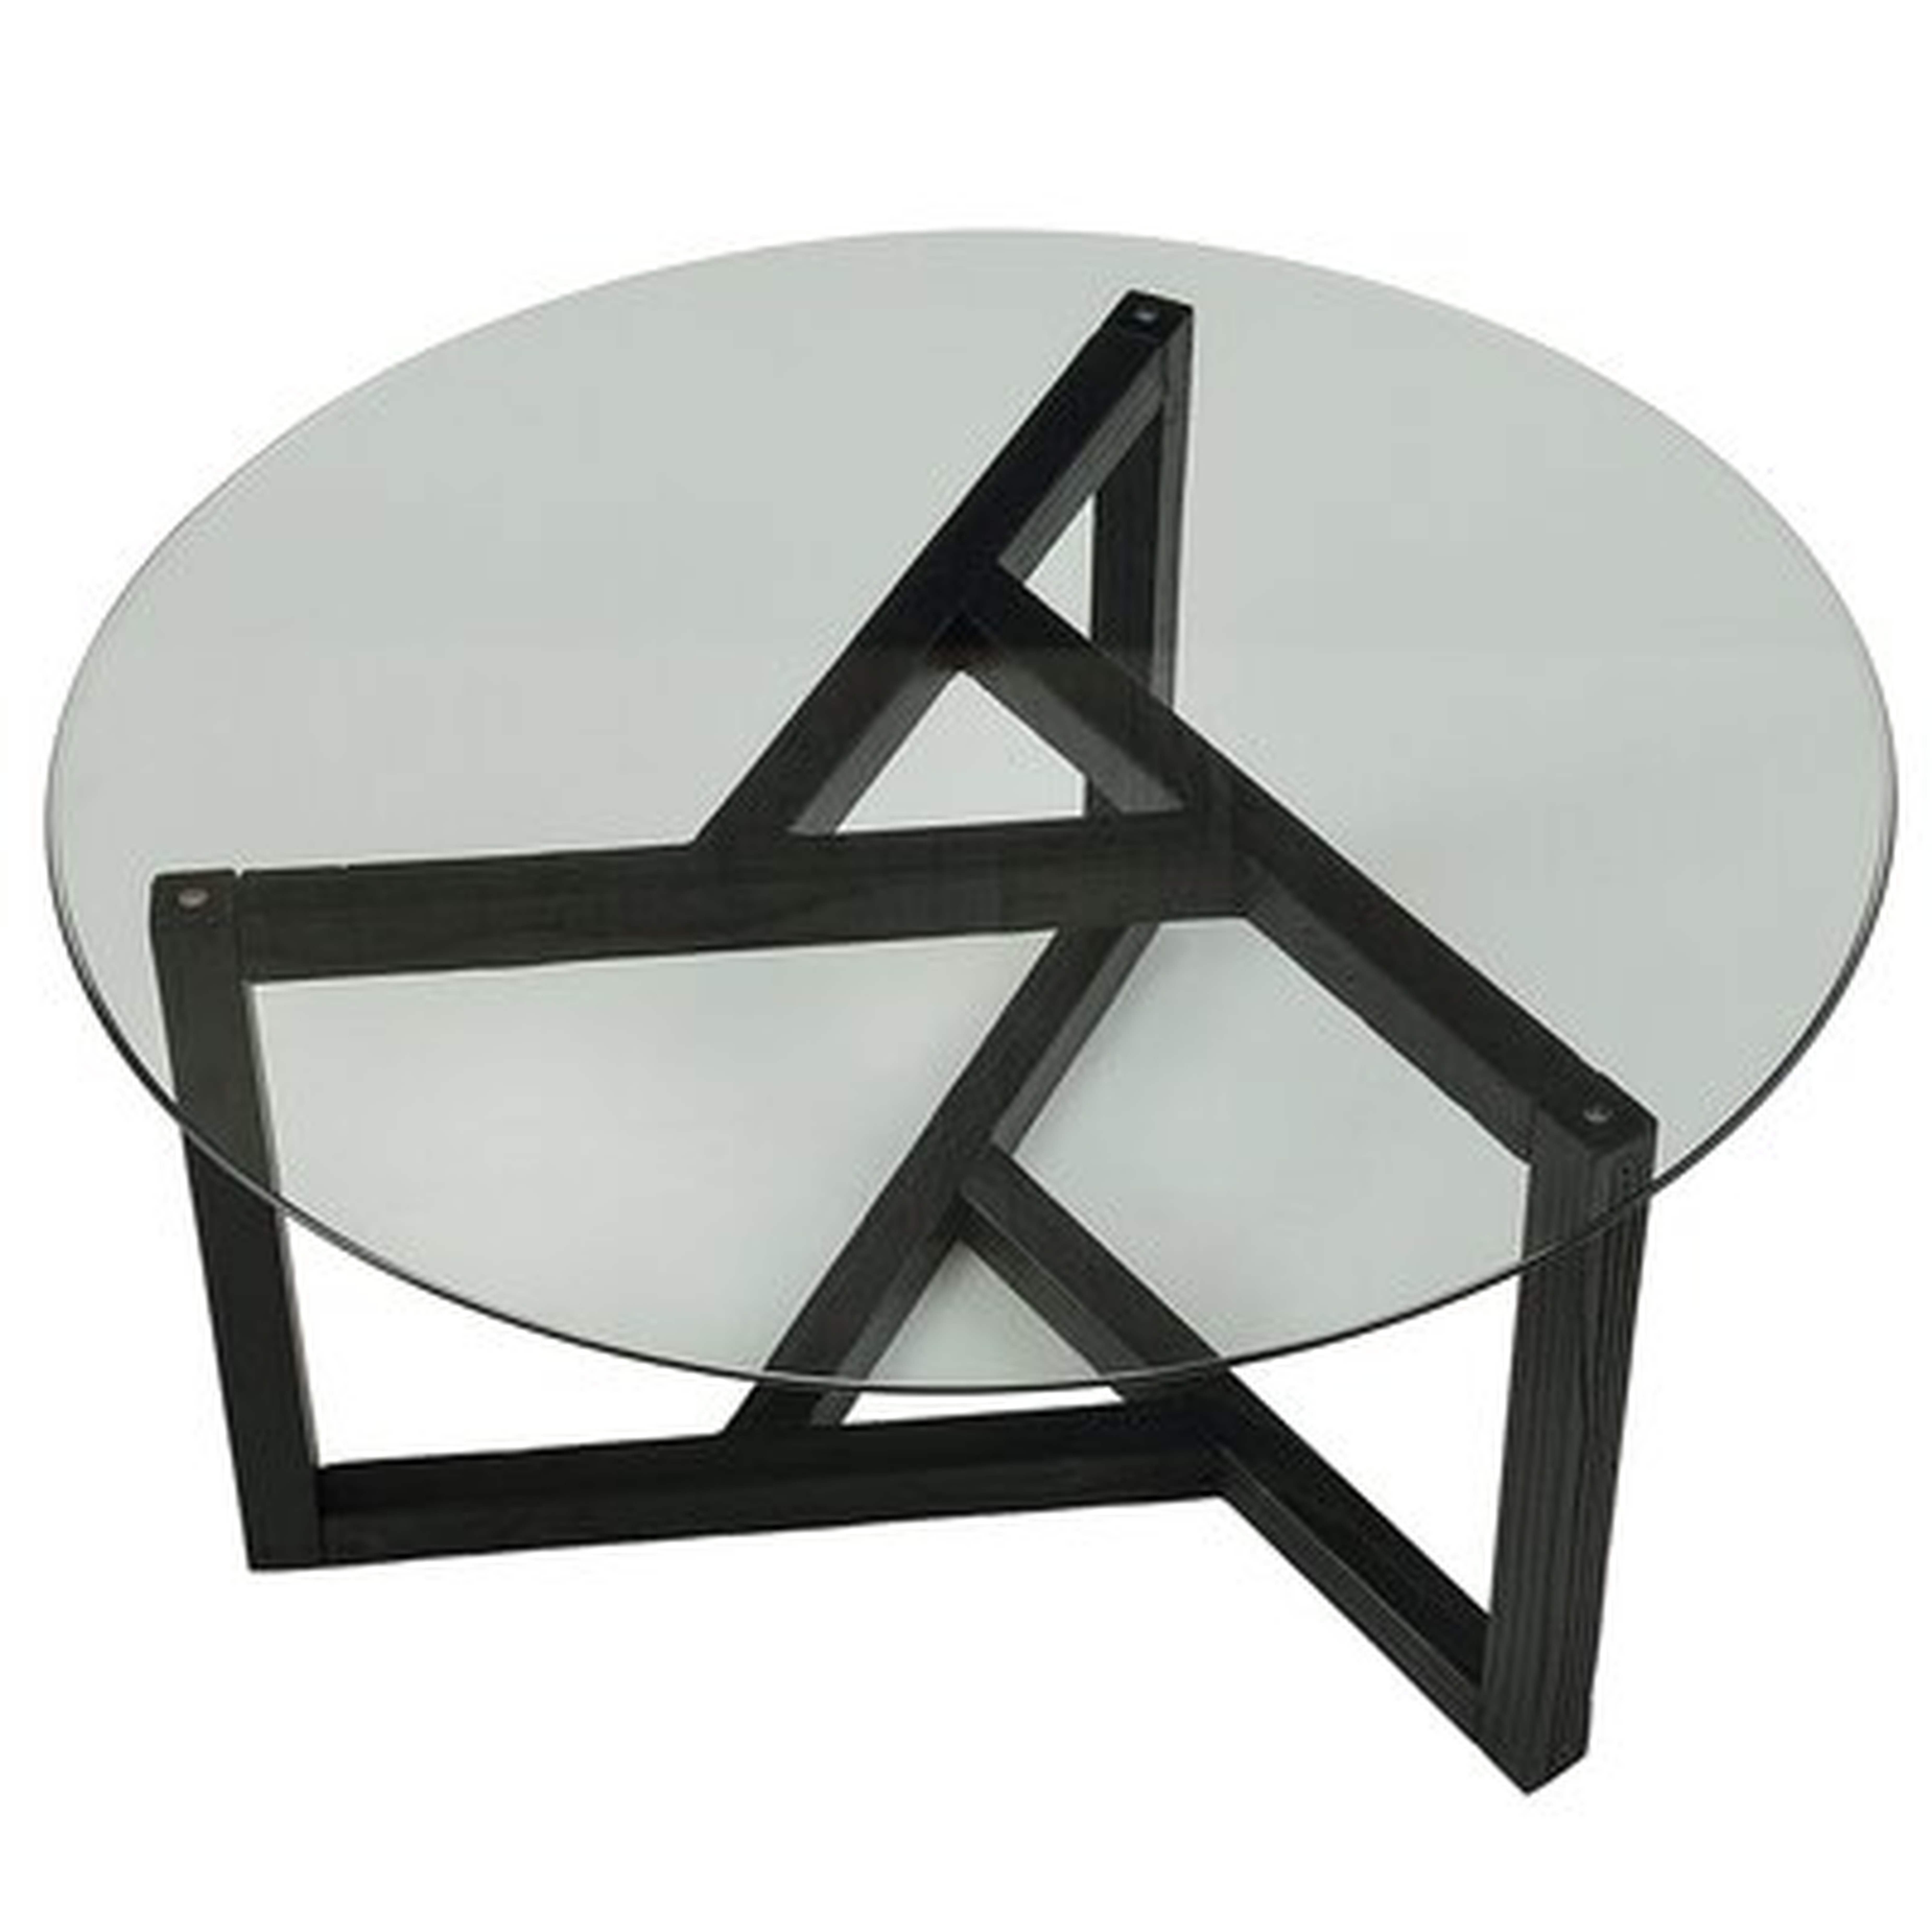 Round Glass Coffee Table With Cross Legs - Wayfair